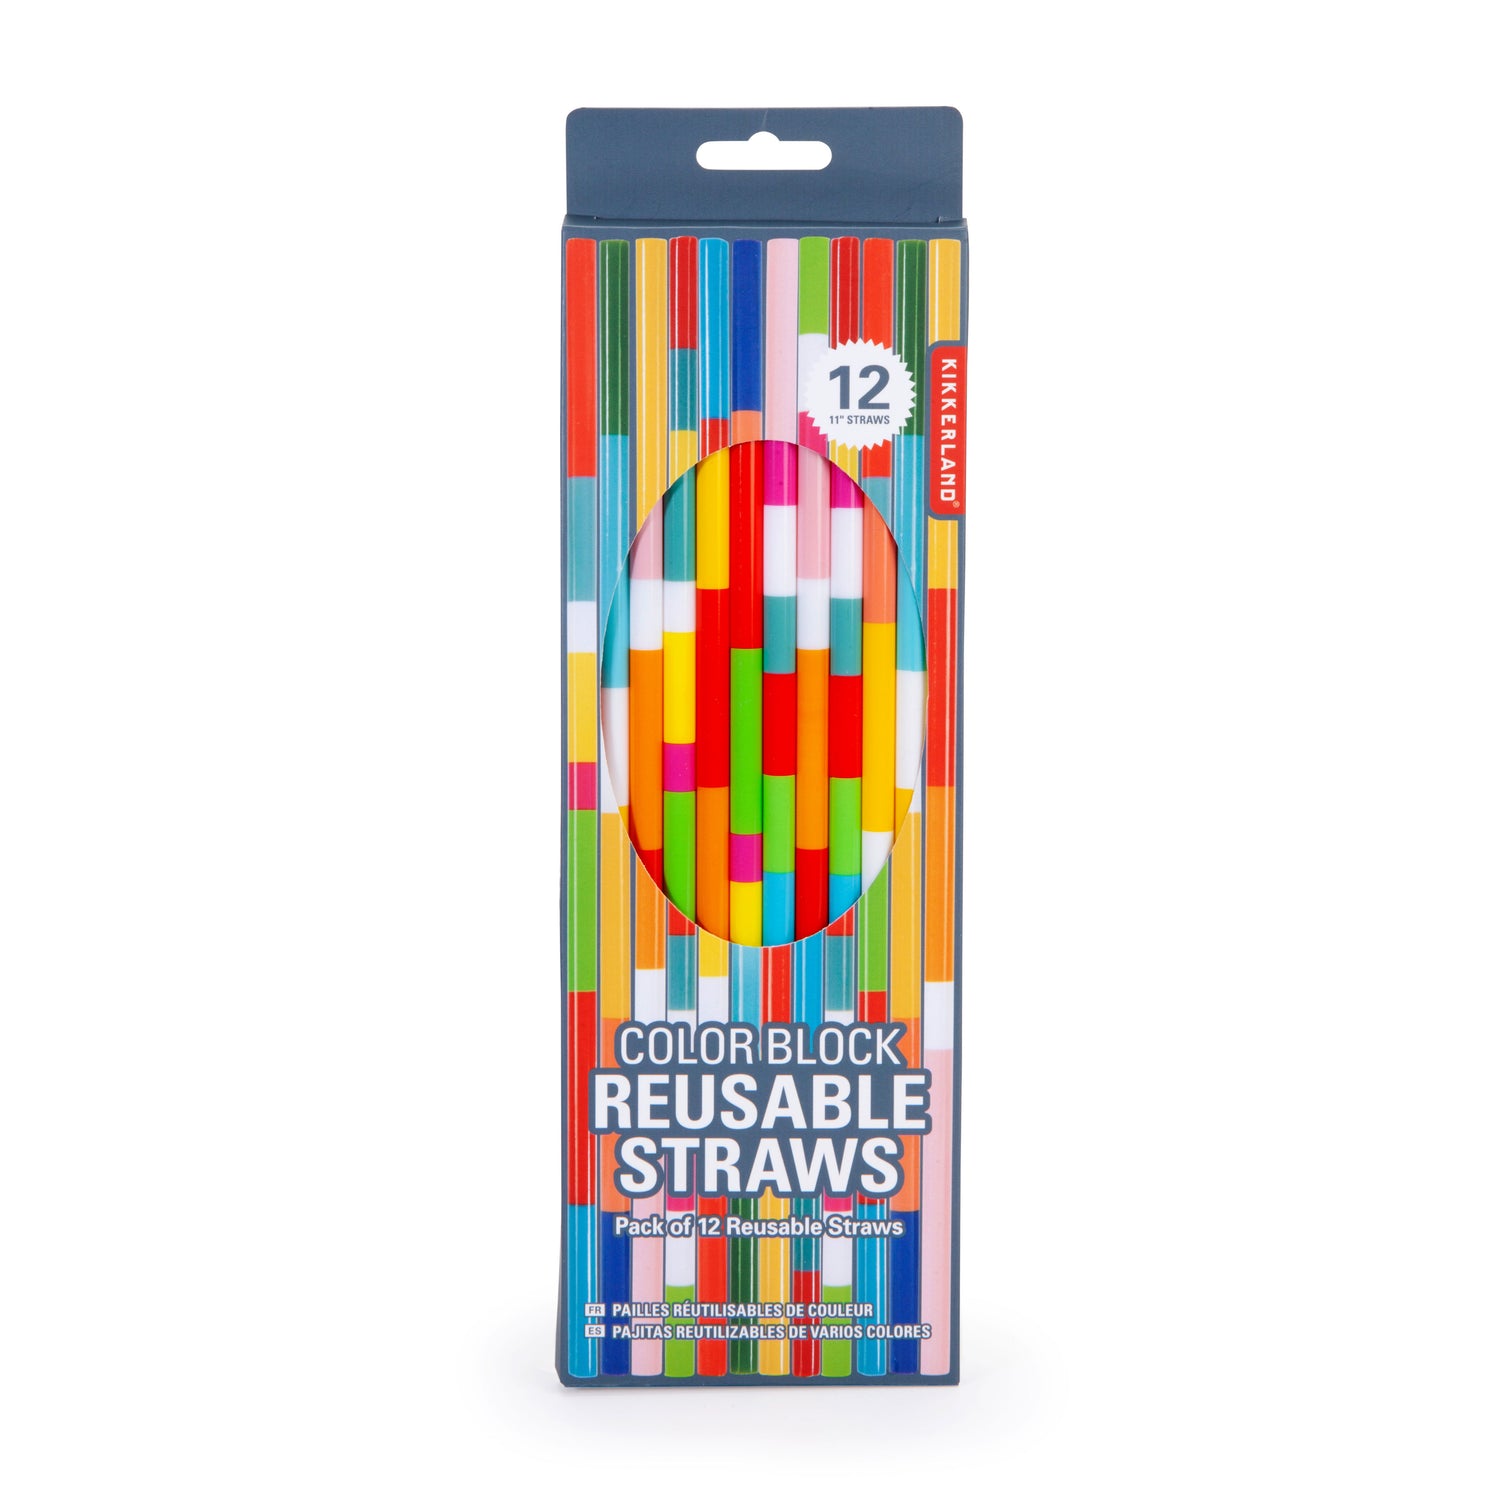 Color Block Reusable Straws